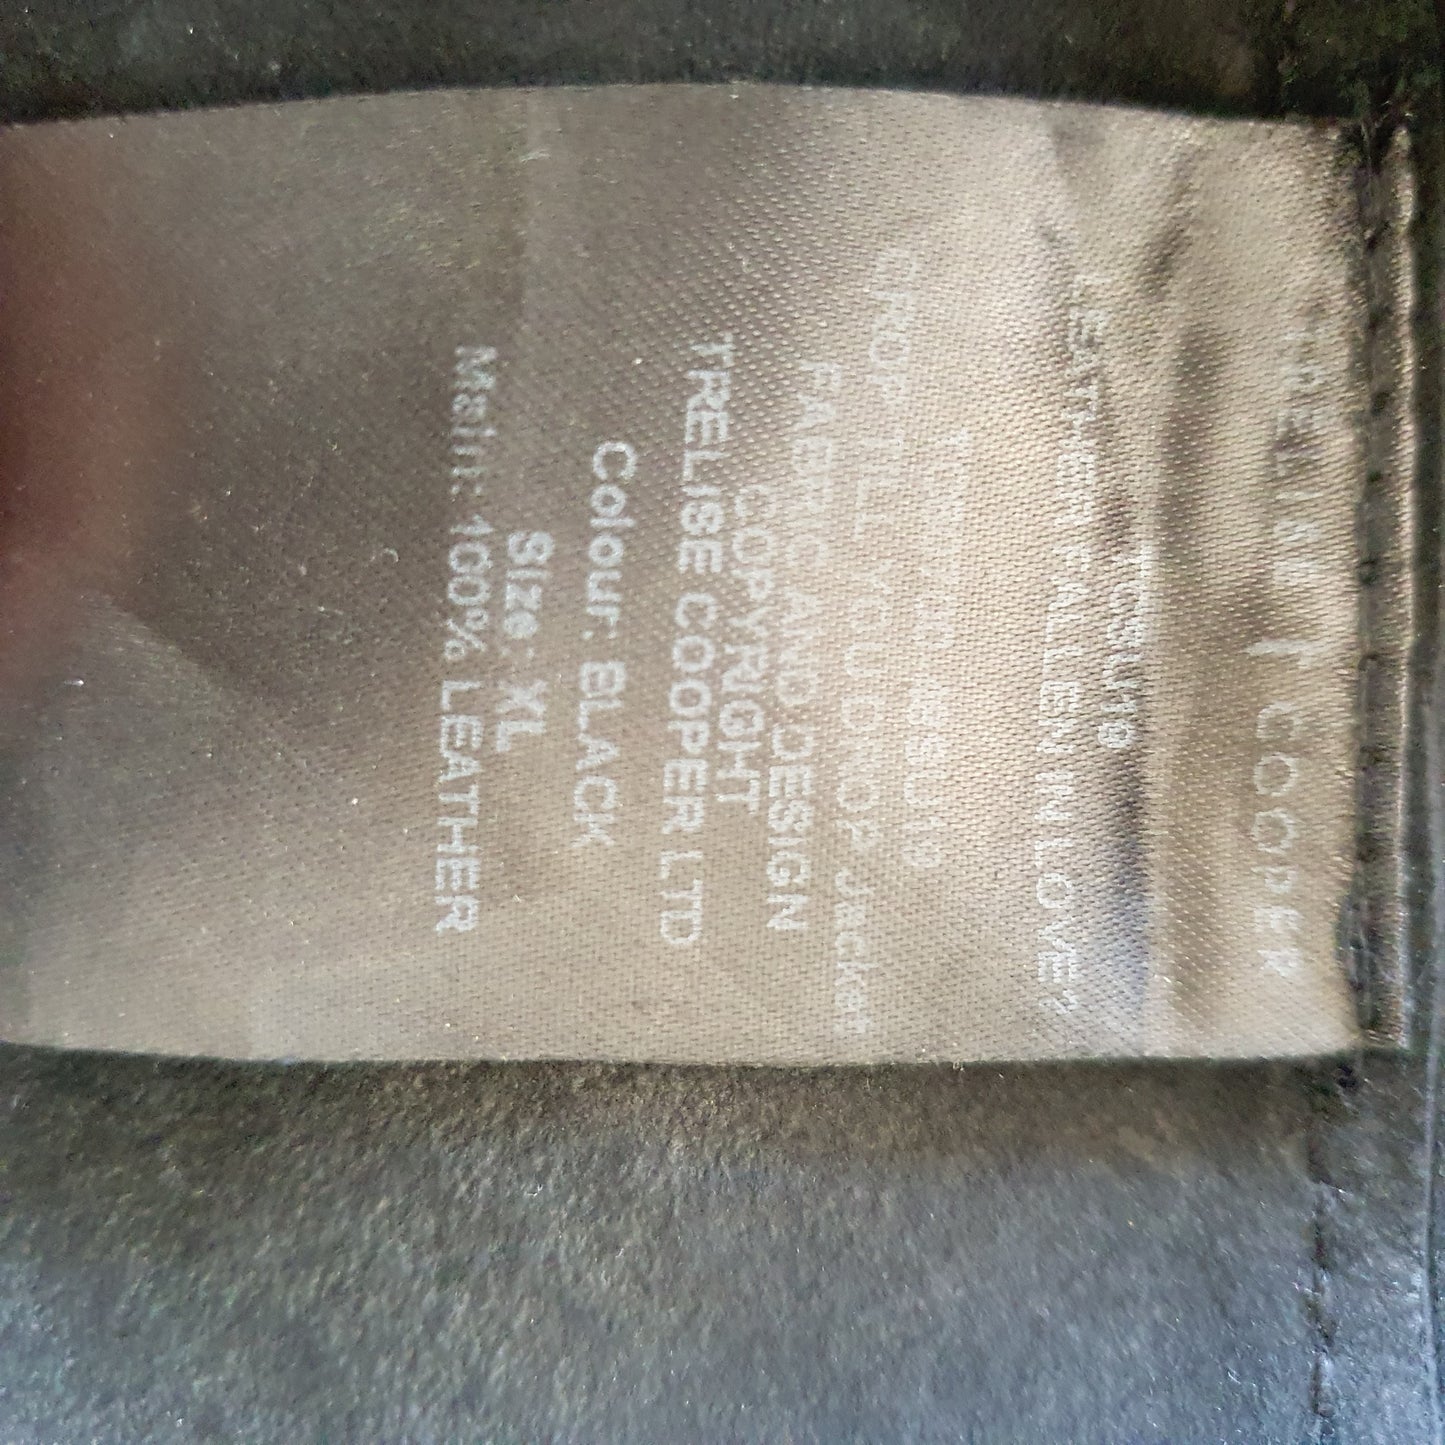 Trelise Cooper Leather Cape Jacket (14)